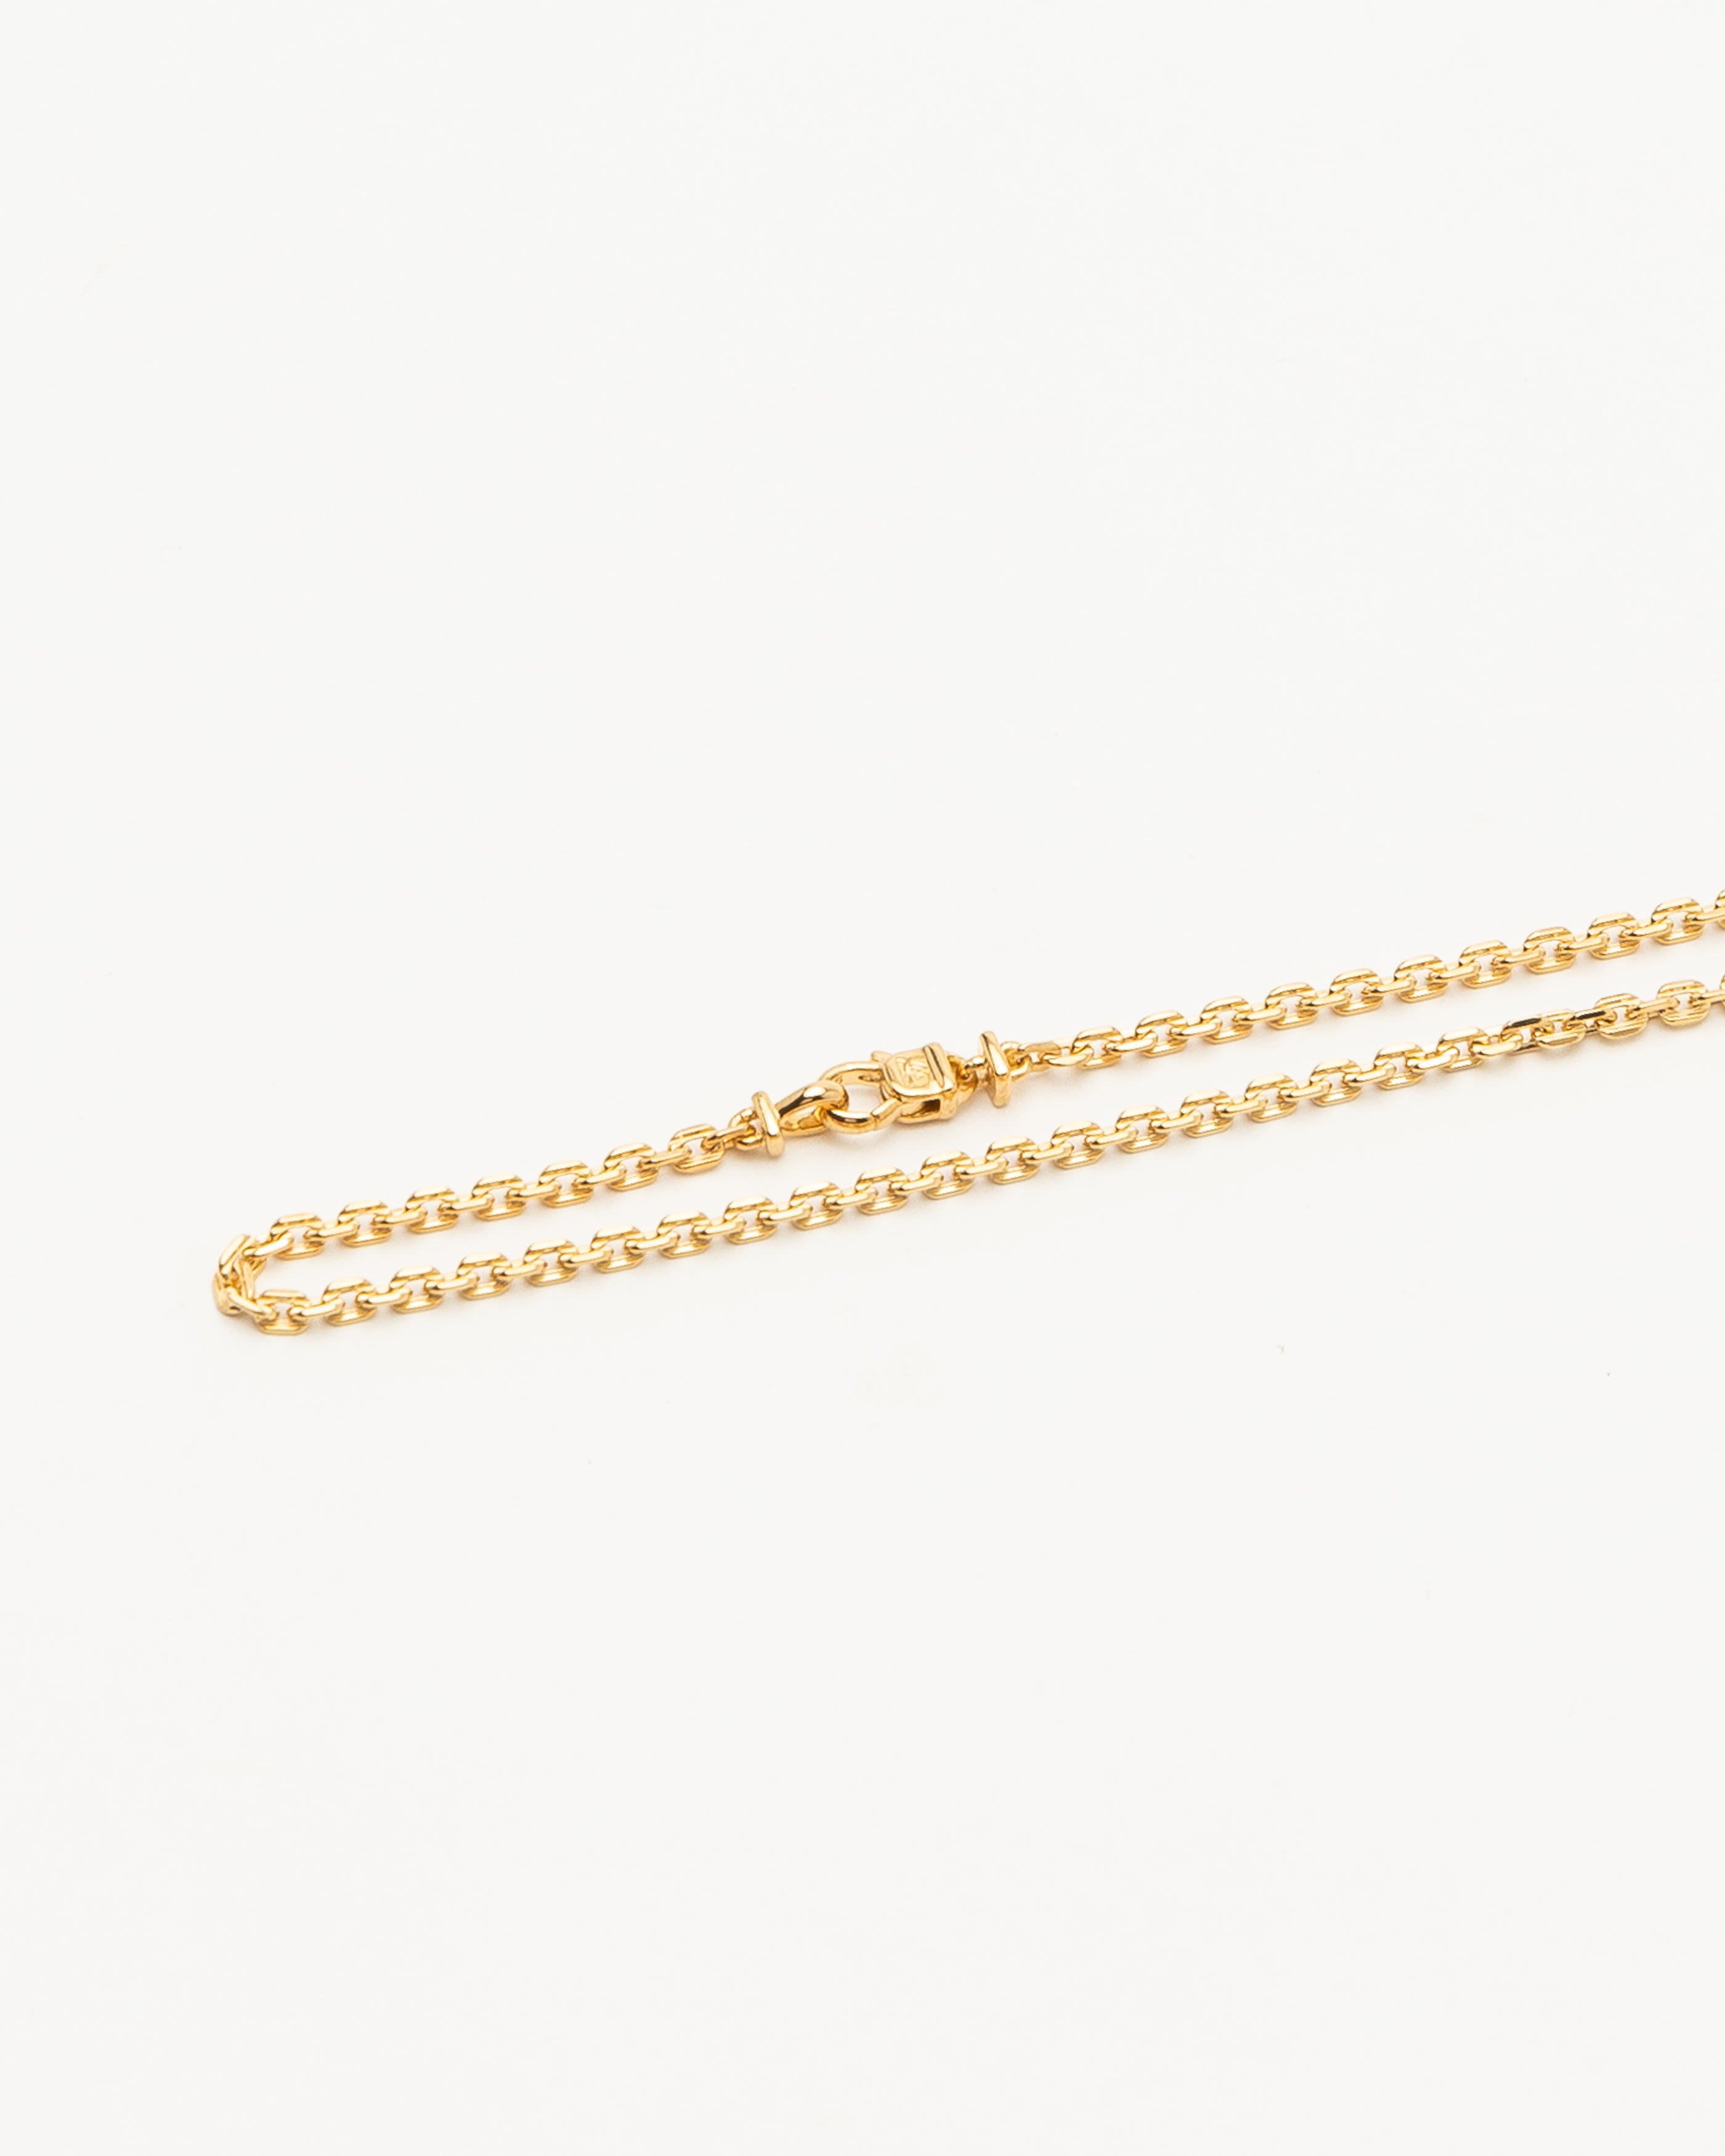 Anker Chain in 9k Gold